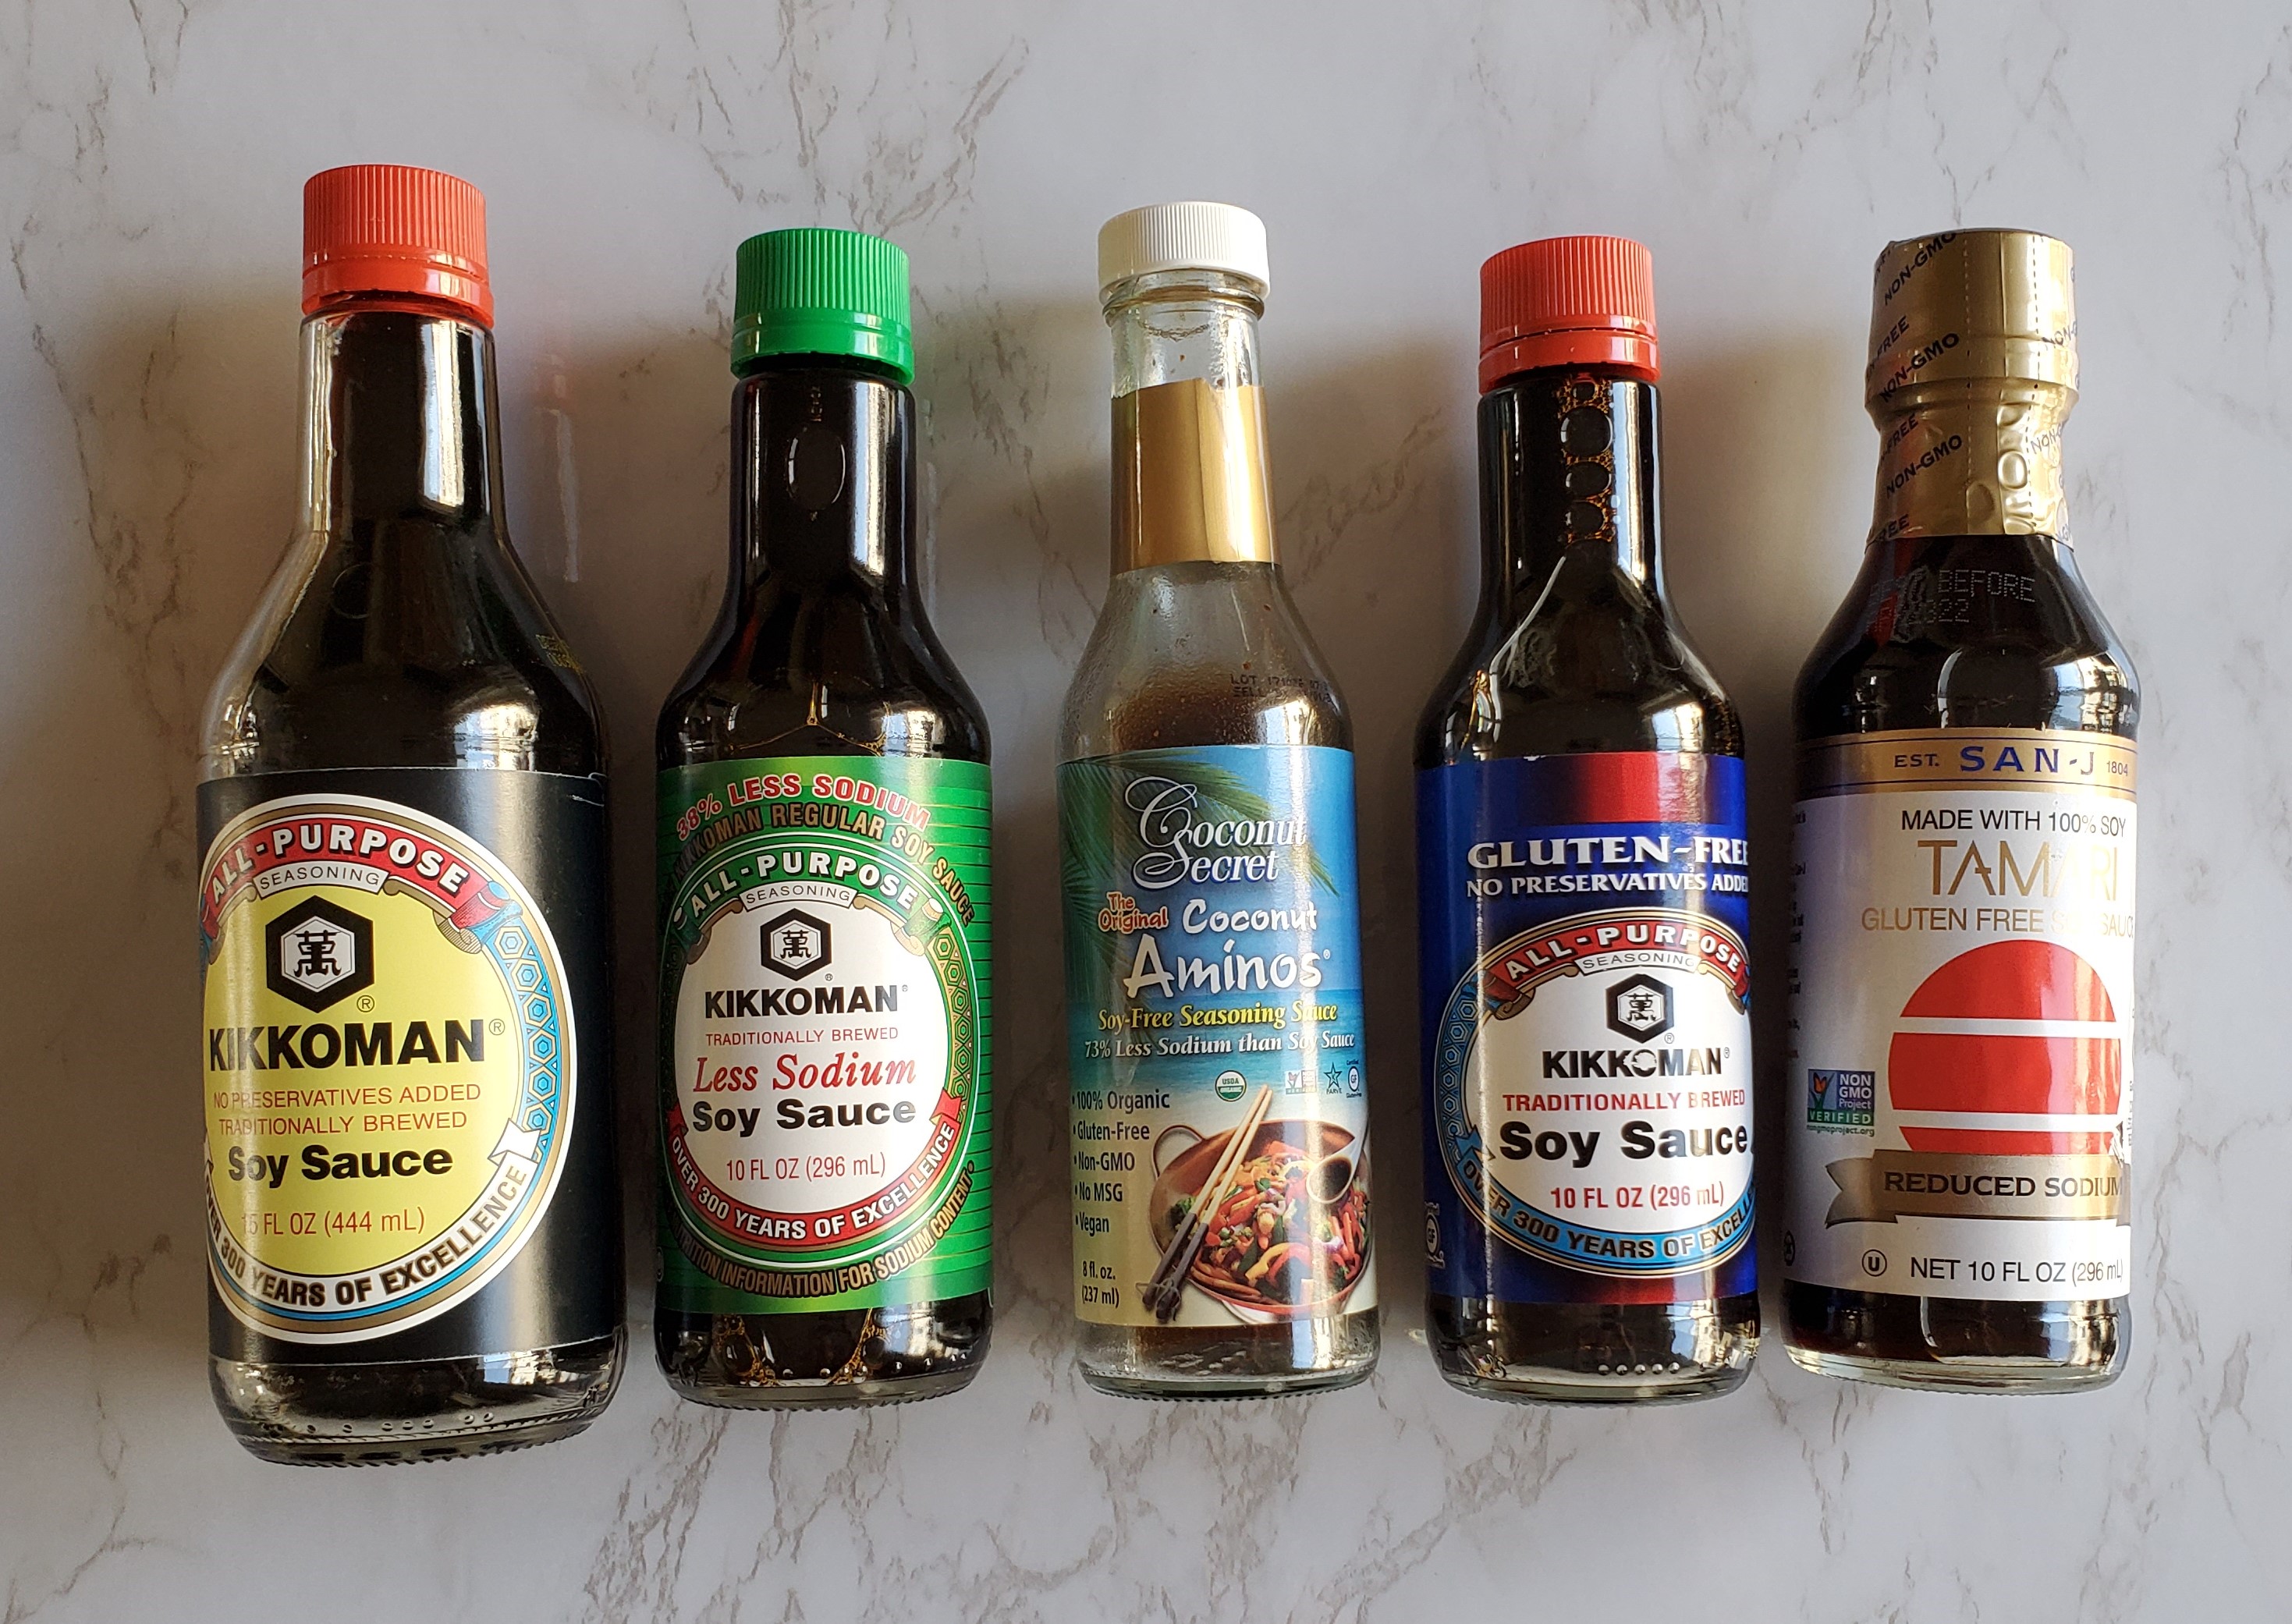 From left to right, Kikkoman Original Soy sauce, less sodium soy sauce, coconut aminos, GF soy sauce and Tamari.